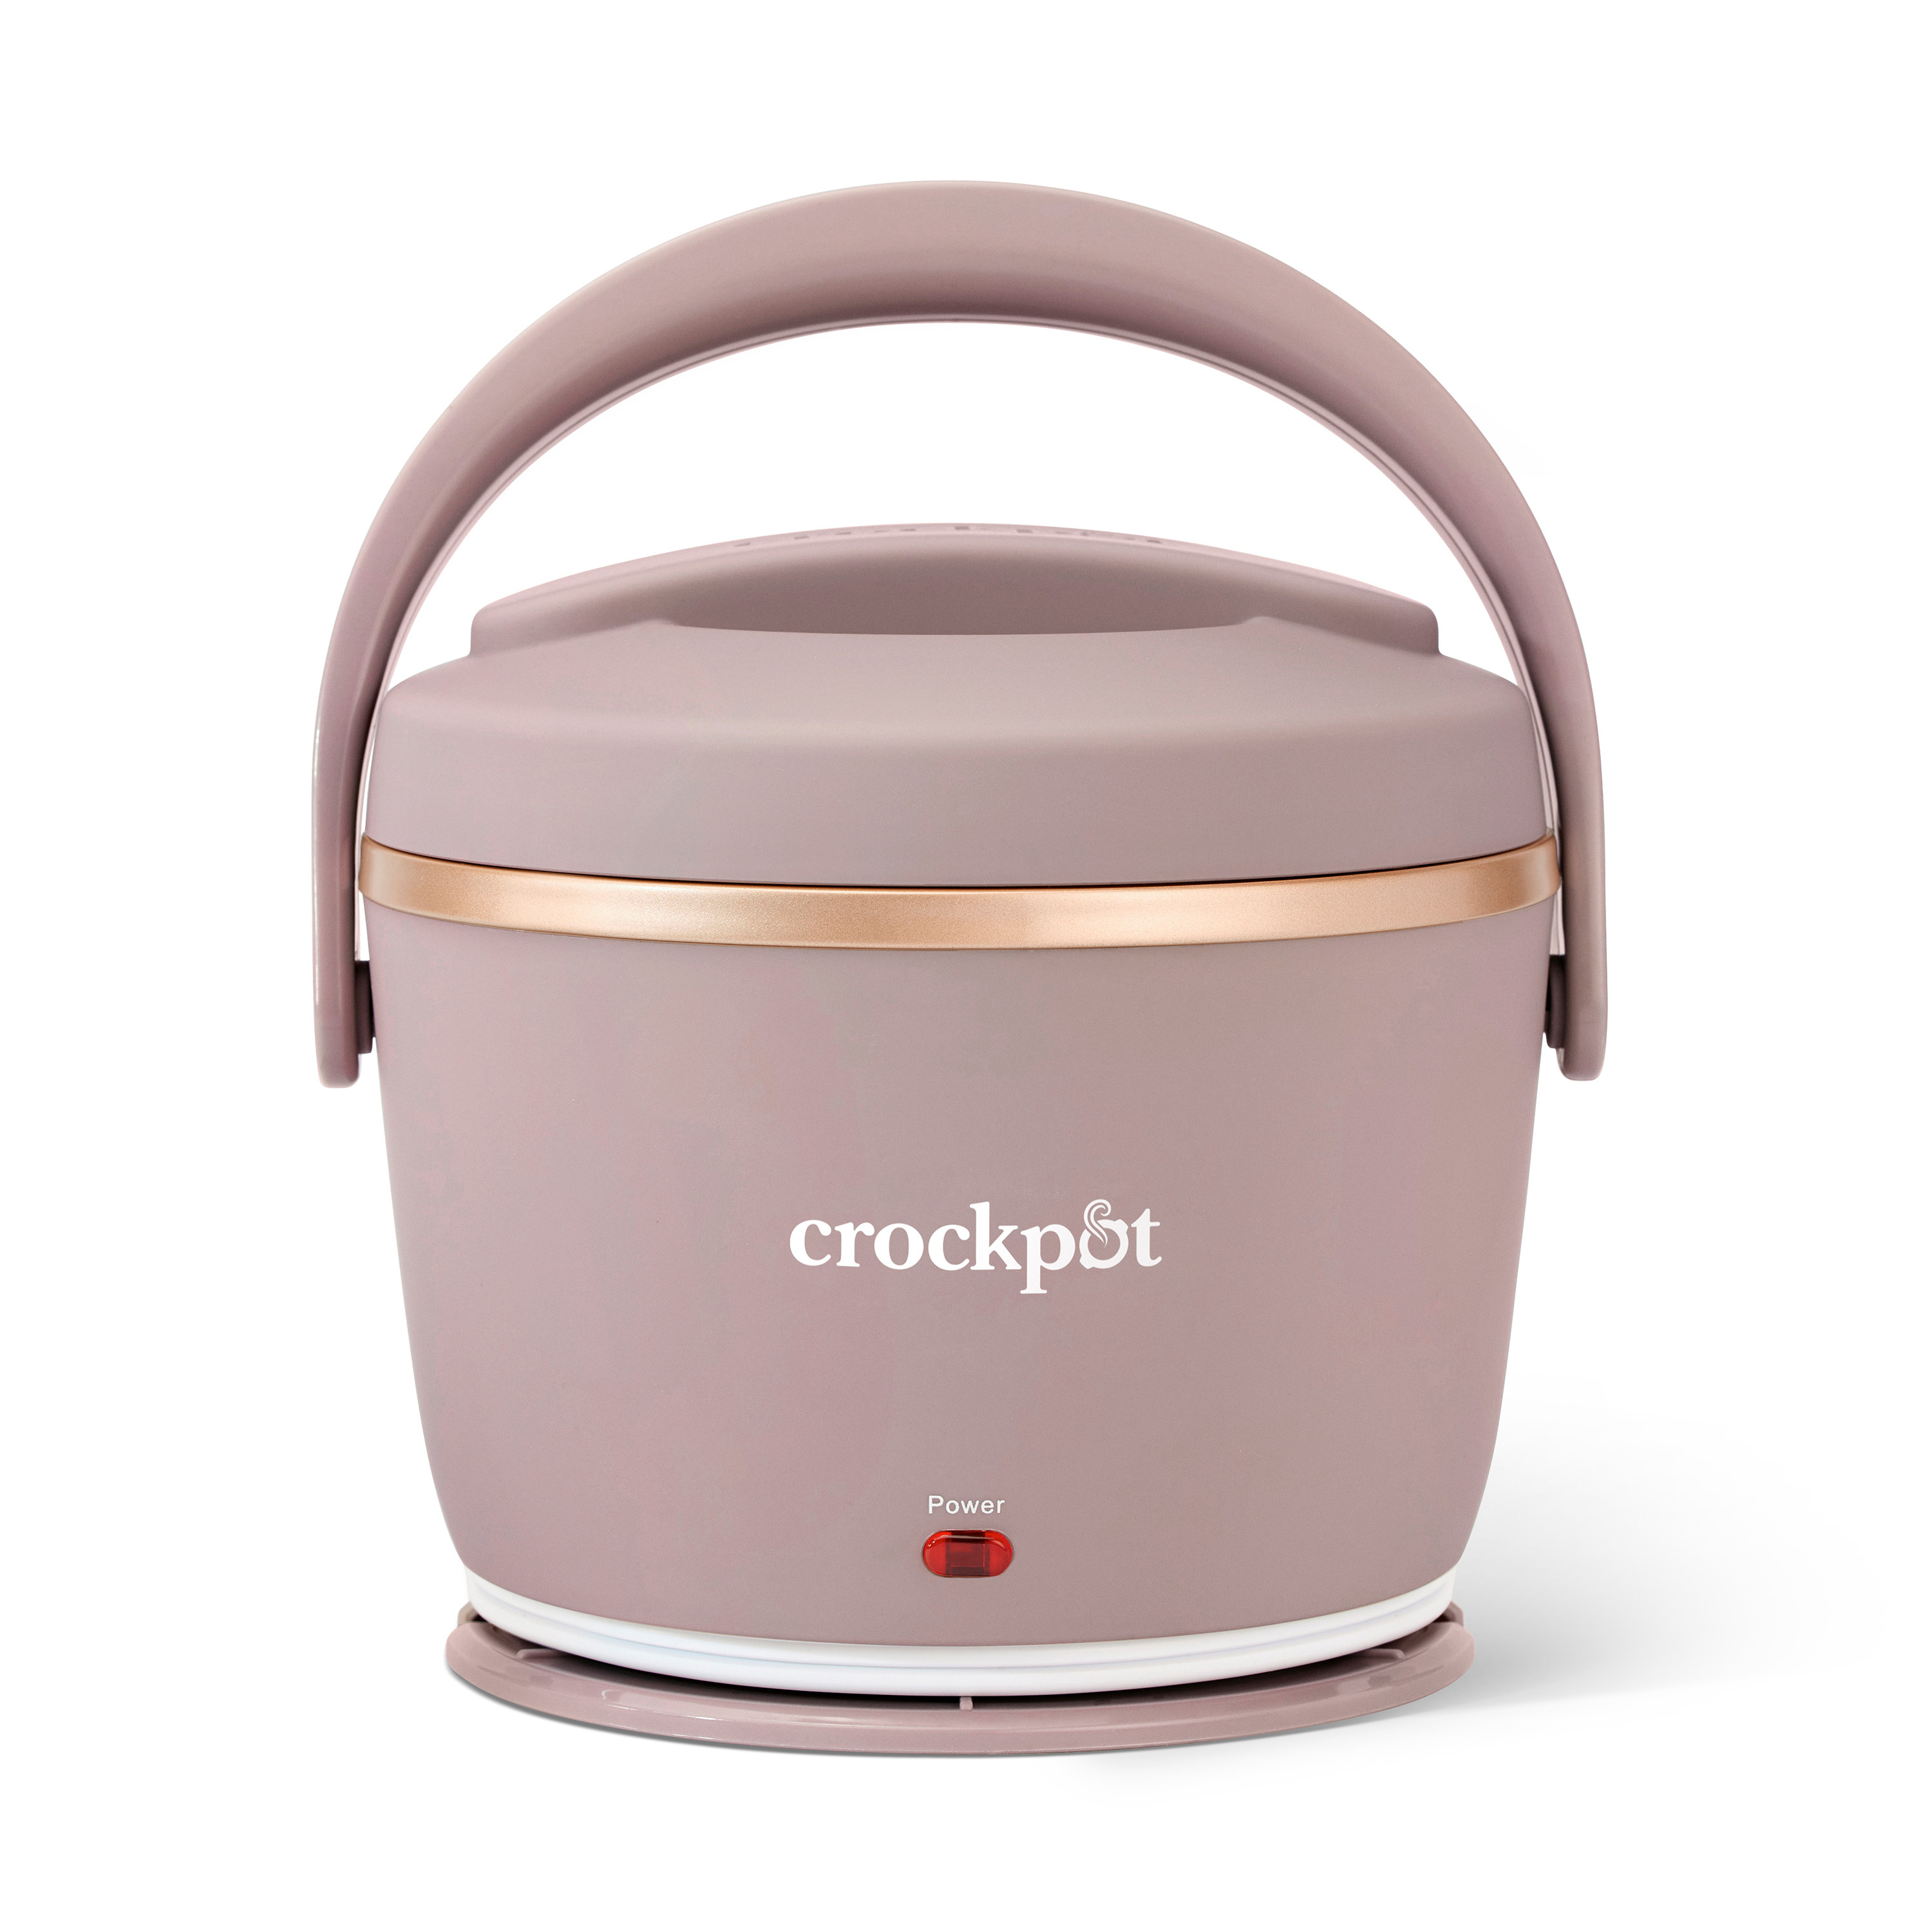 Crockpot 20-oz. Lunch Crock Food Warmer, Sphinx Pink (6.6 L x 6.6 W x 6.4 H) - image 1 of 9